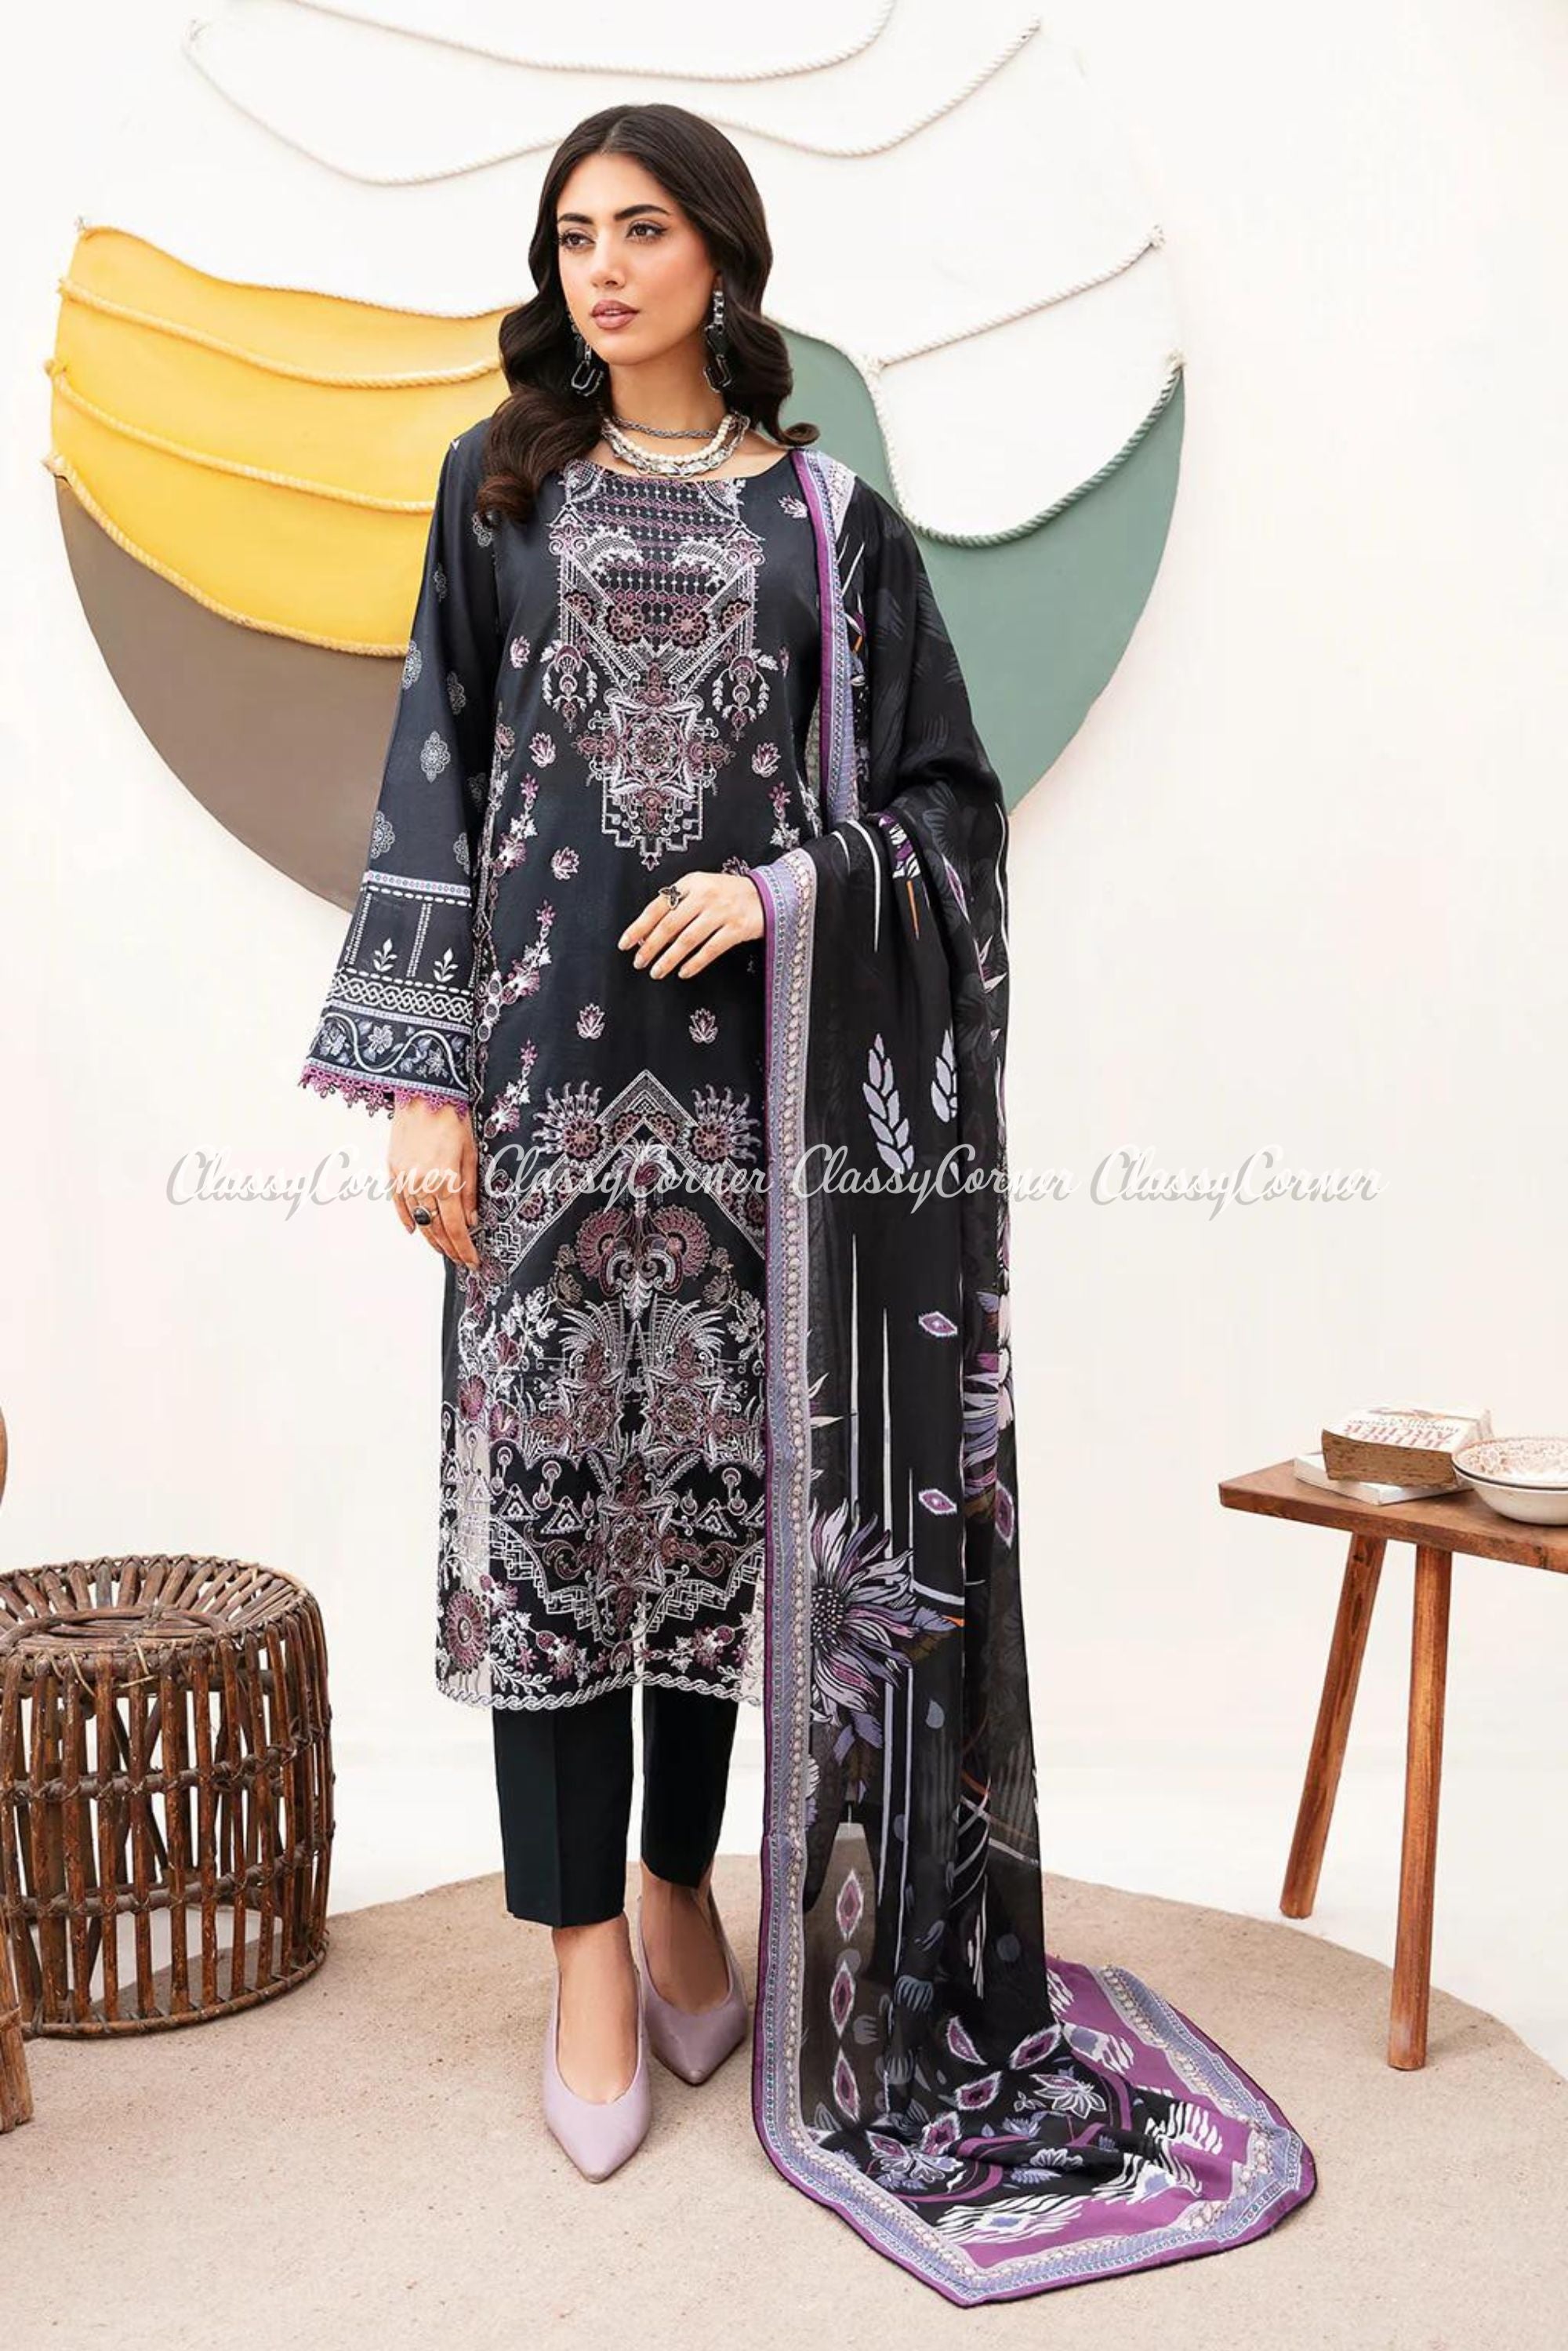 Desi Pakistani Semi Formal Outfits For Women